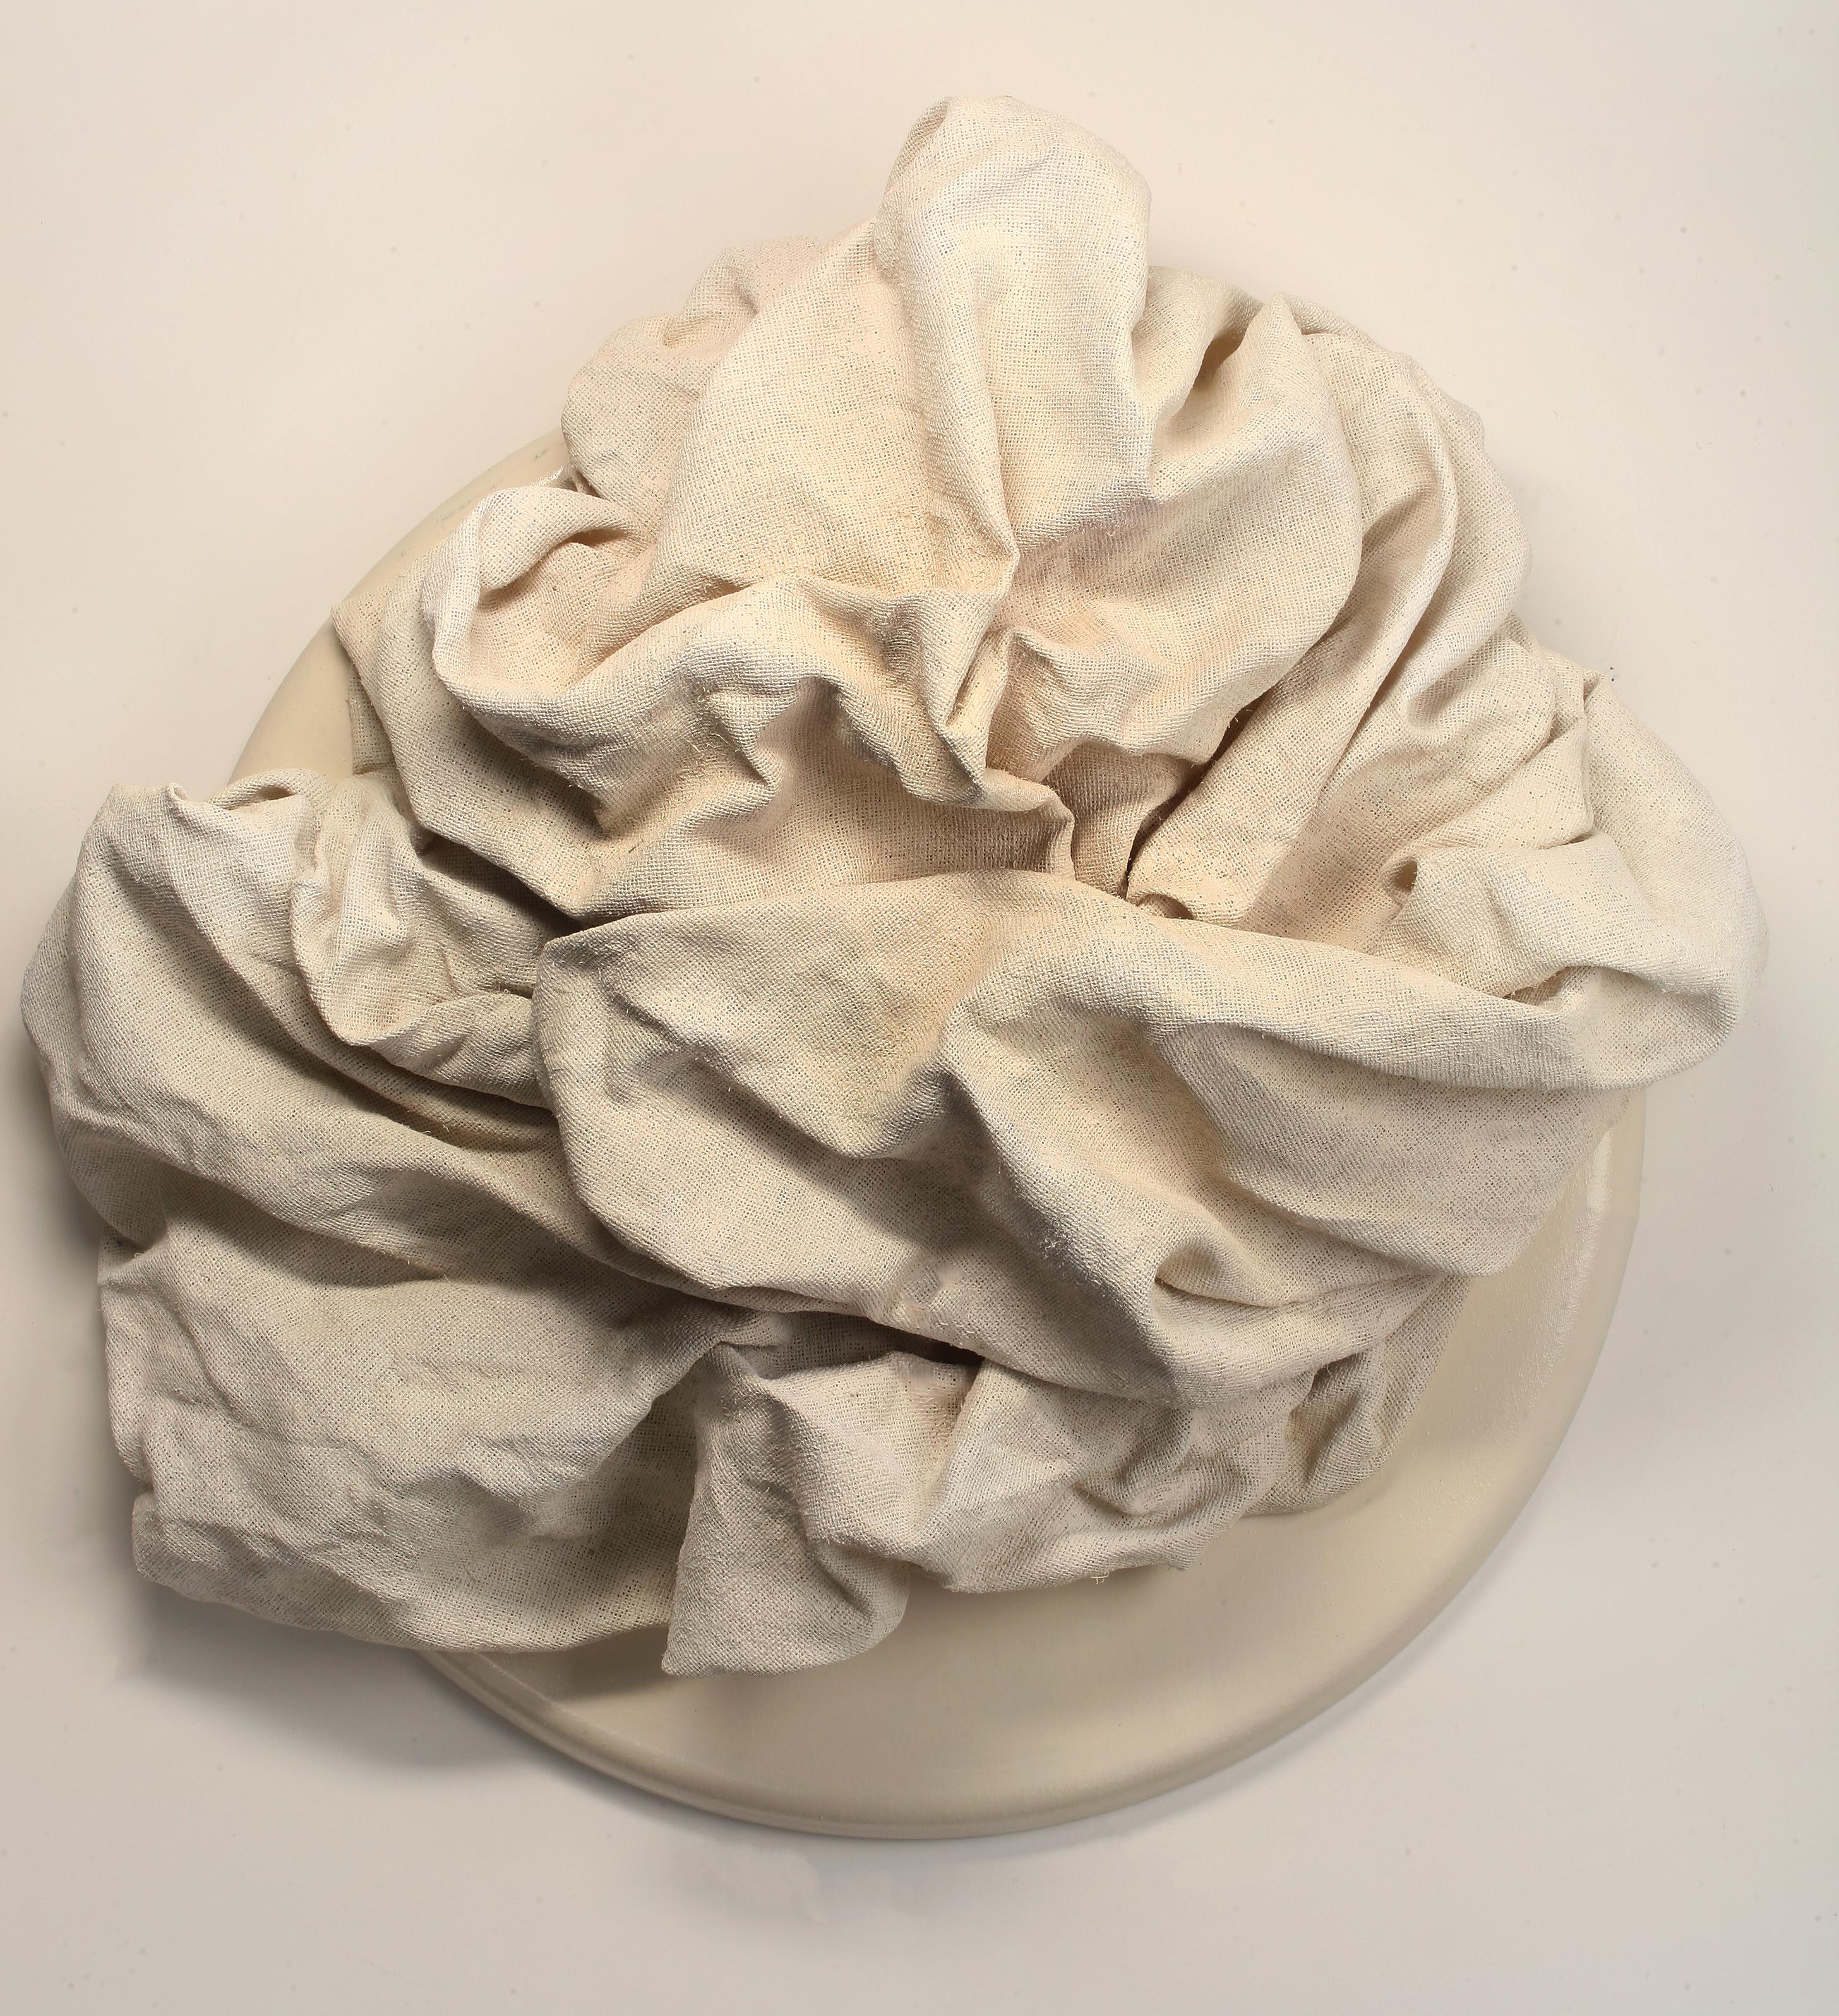 Abstract Sculpture Chloe Hedden - Sculpture murale Creme Folds - tissu, monochrome, élégante, audacieuse